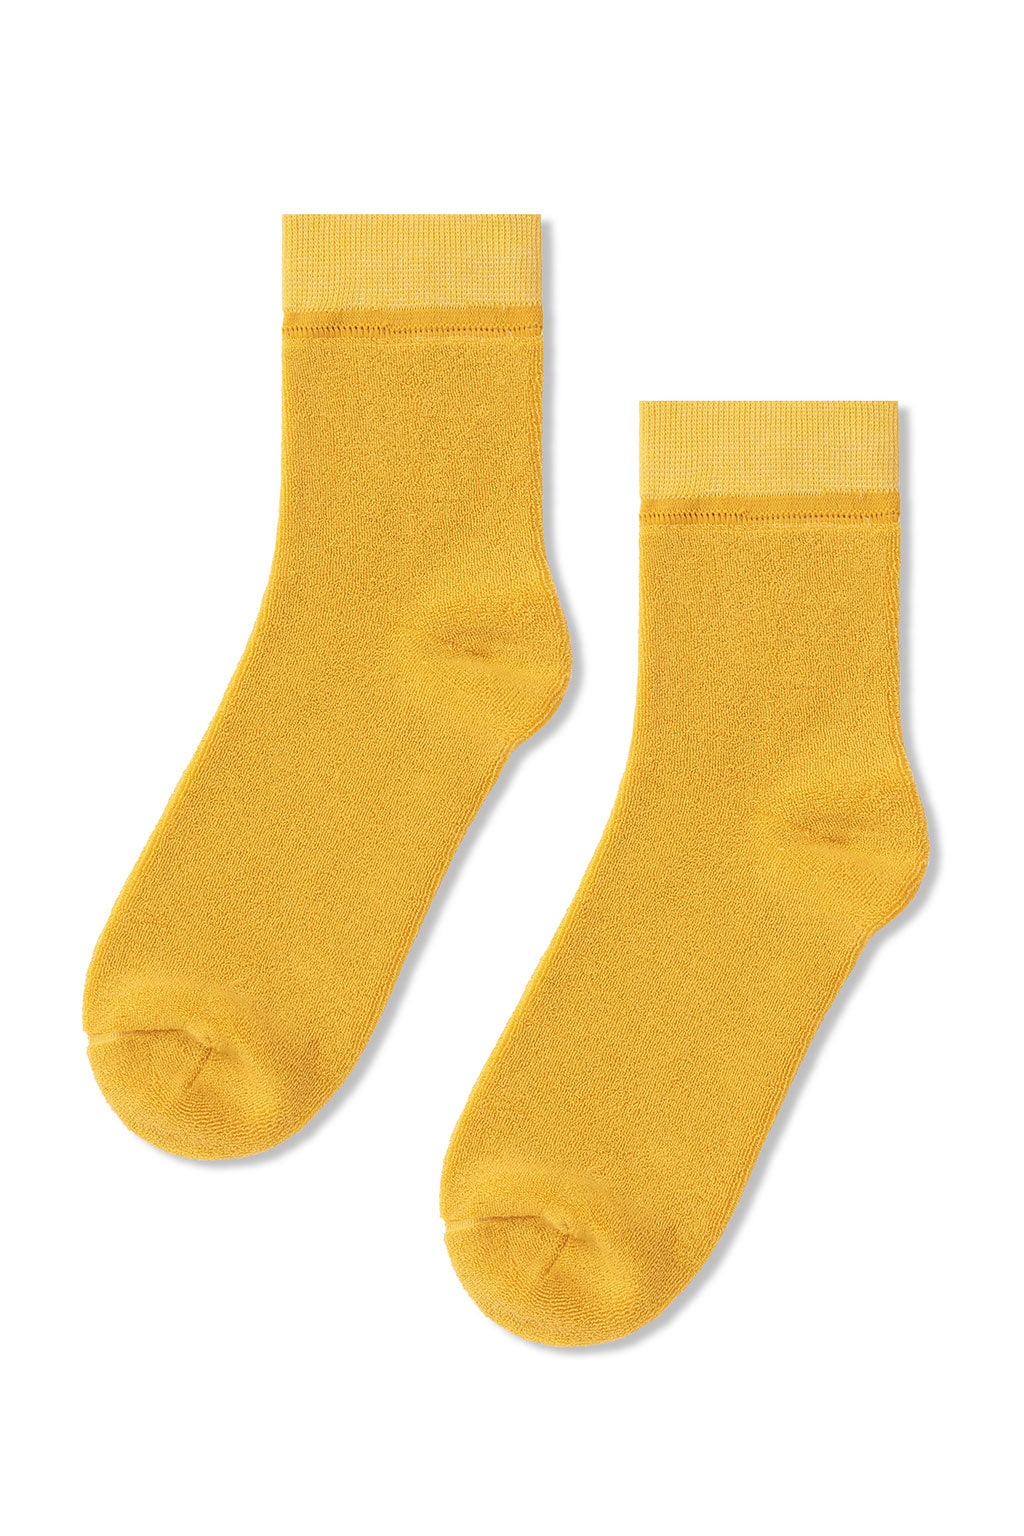 Tailored Union Terry soft yellow socks